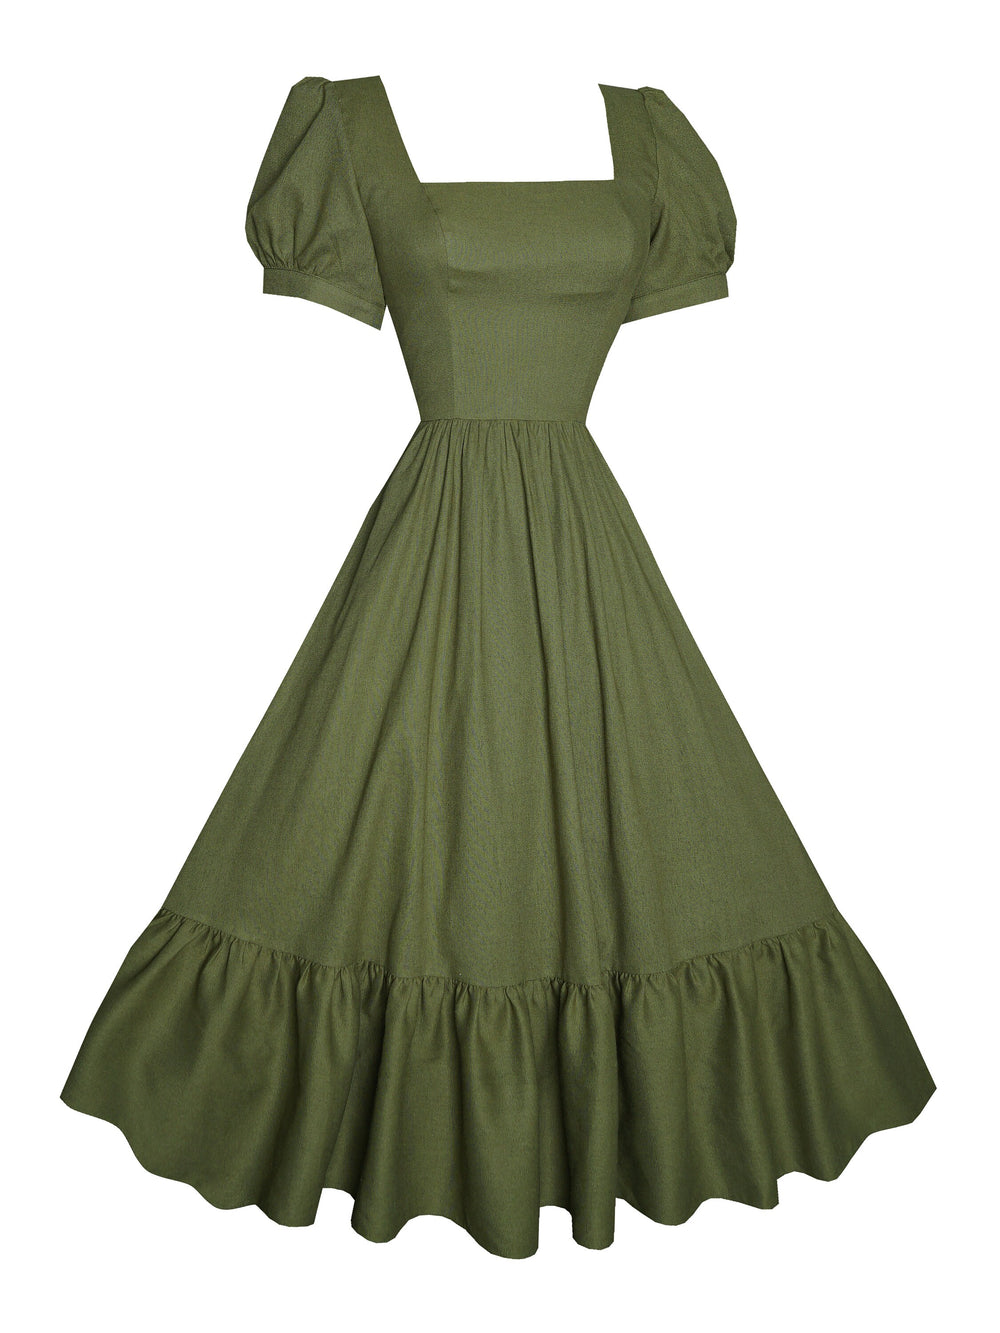 MTO - Isadora Dress in Hunters Green Linen